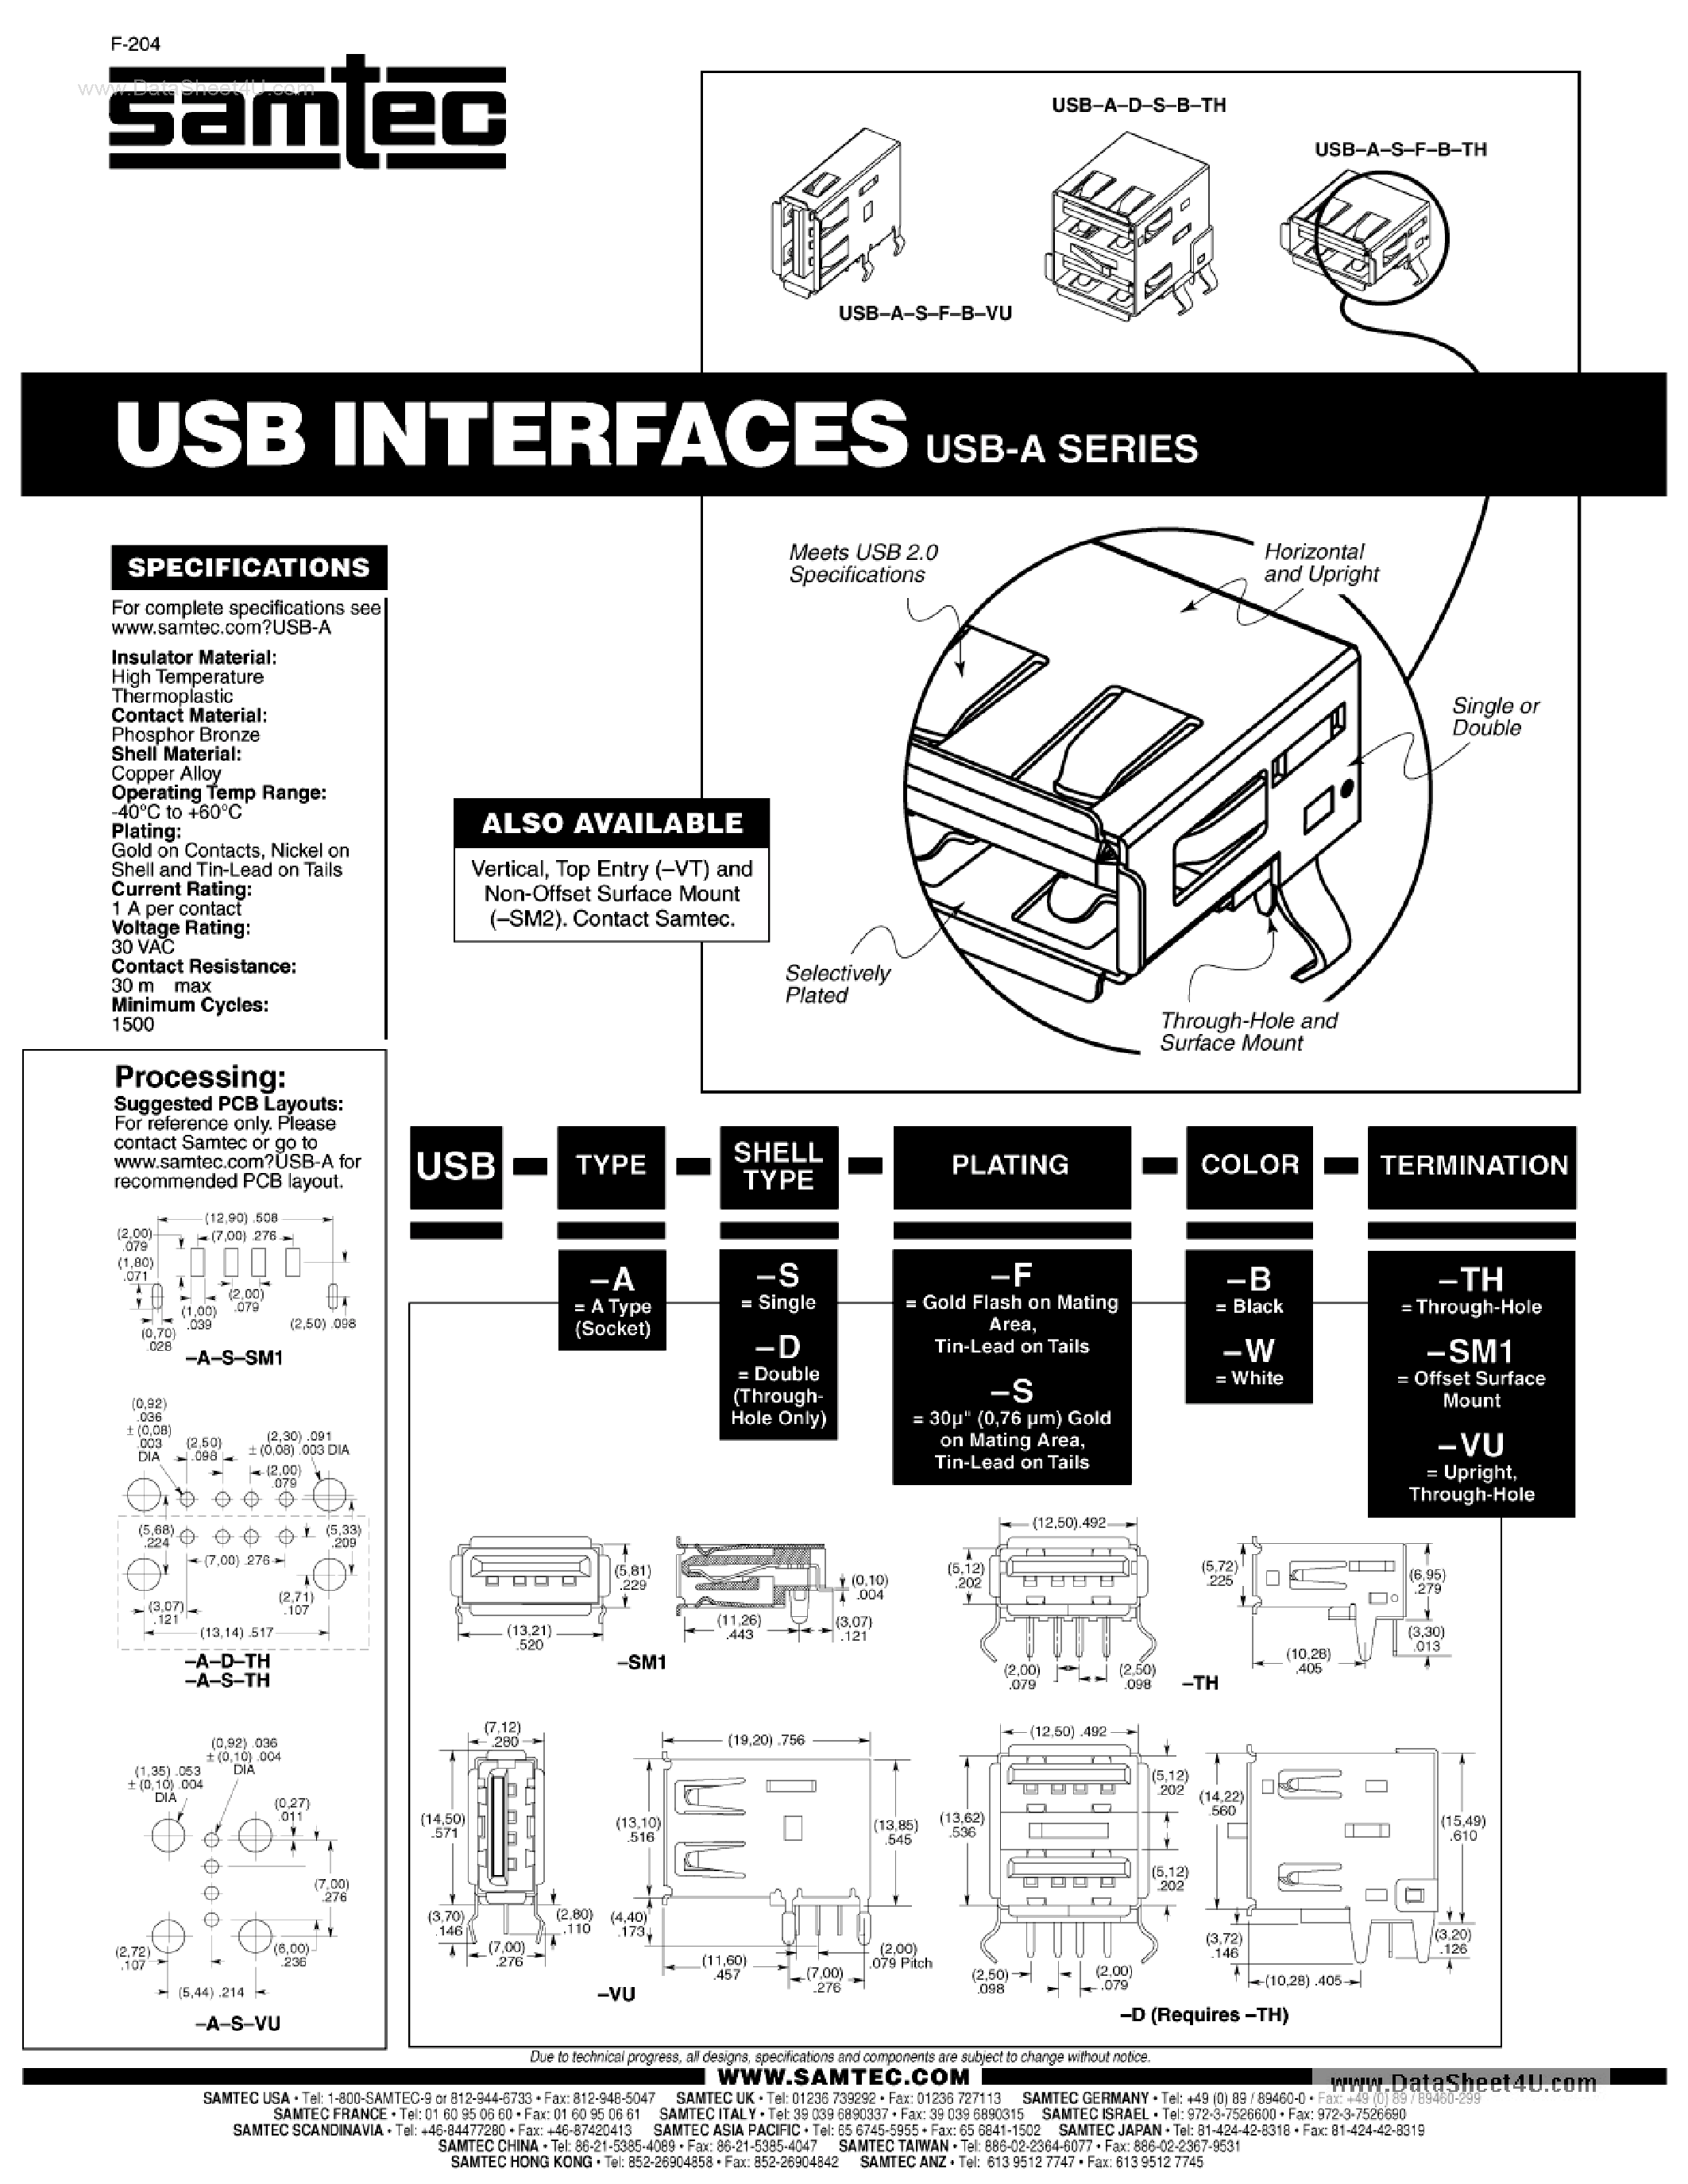 Datasheet USB-A-D-F-x-xxx - (USB-A Series) Interfaces page 1